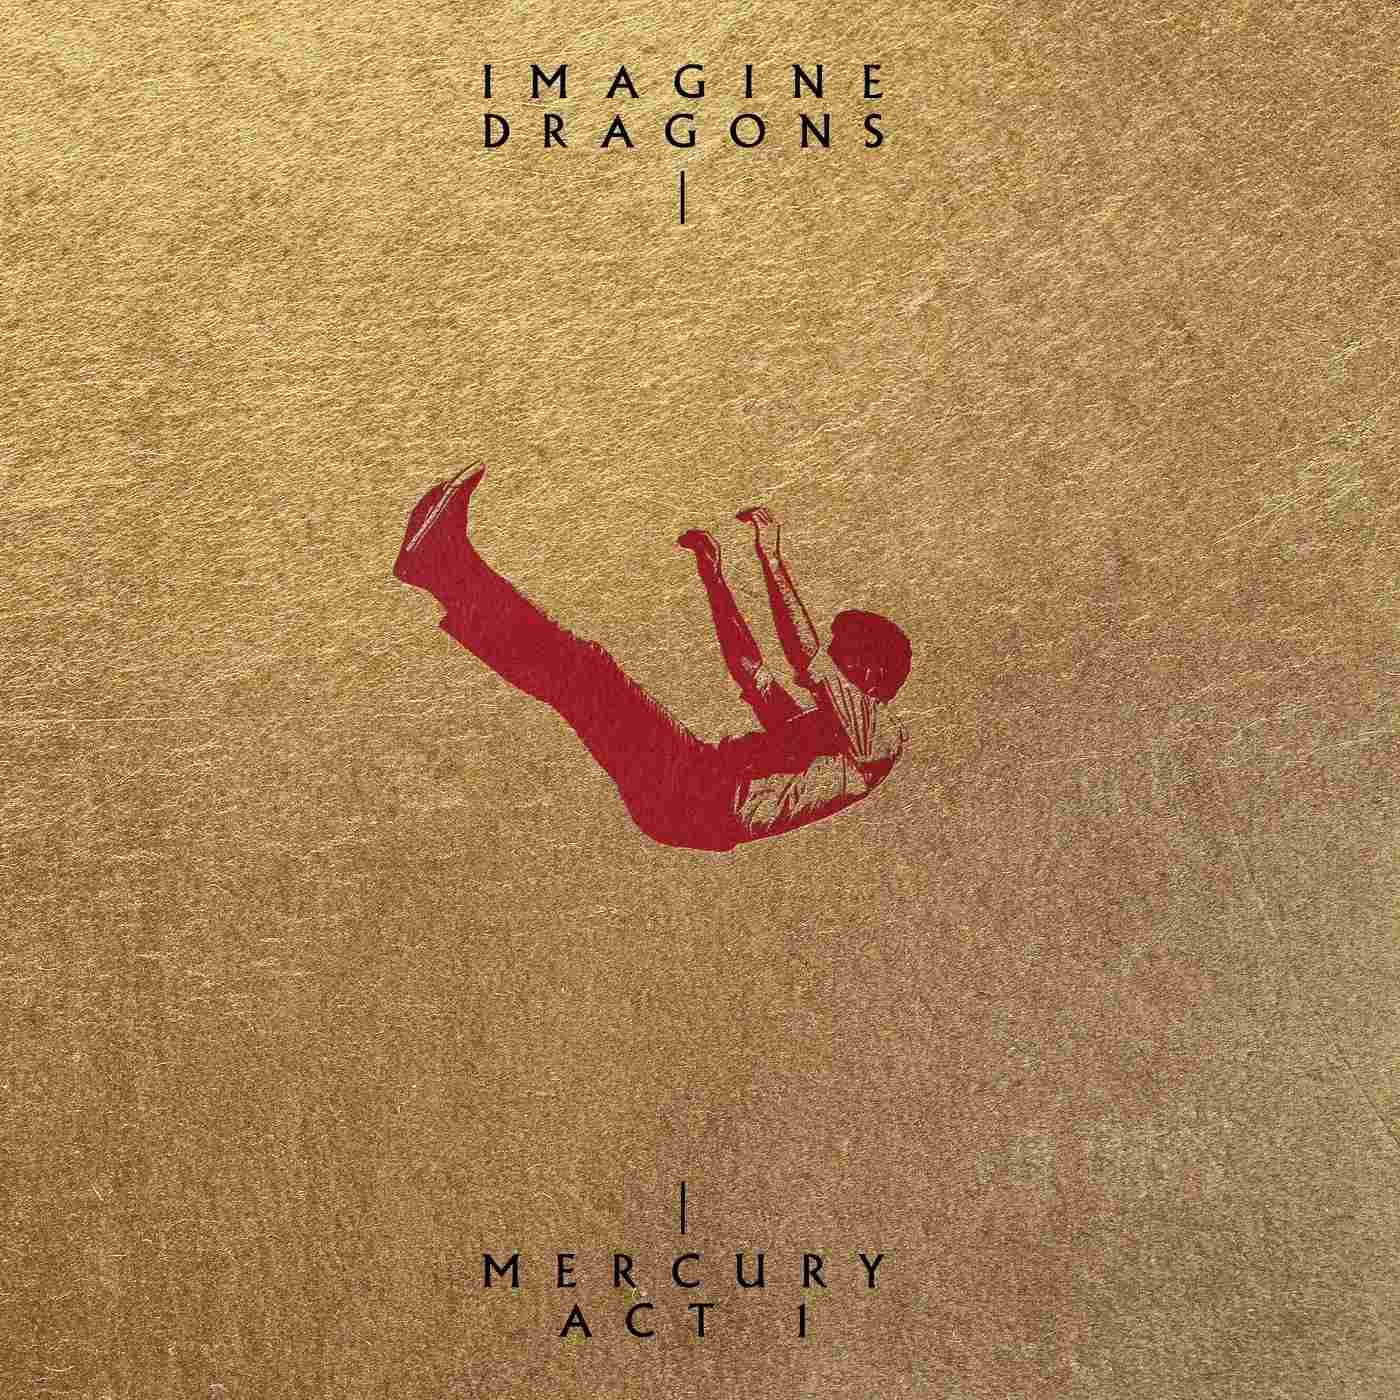 imagine dragons mercury act 1 red man vinyl lp